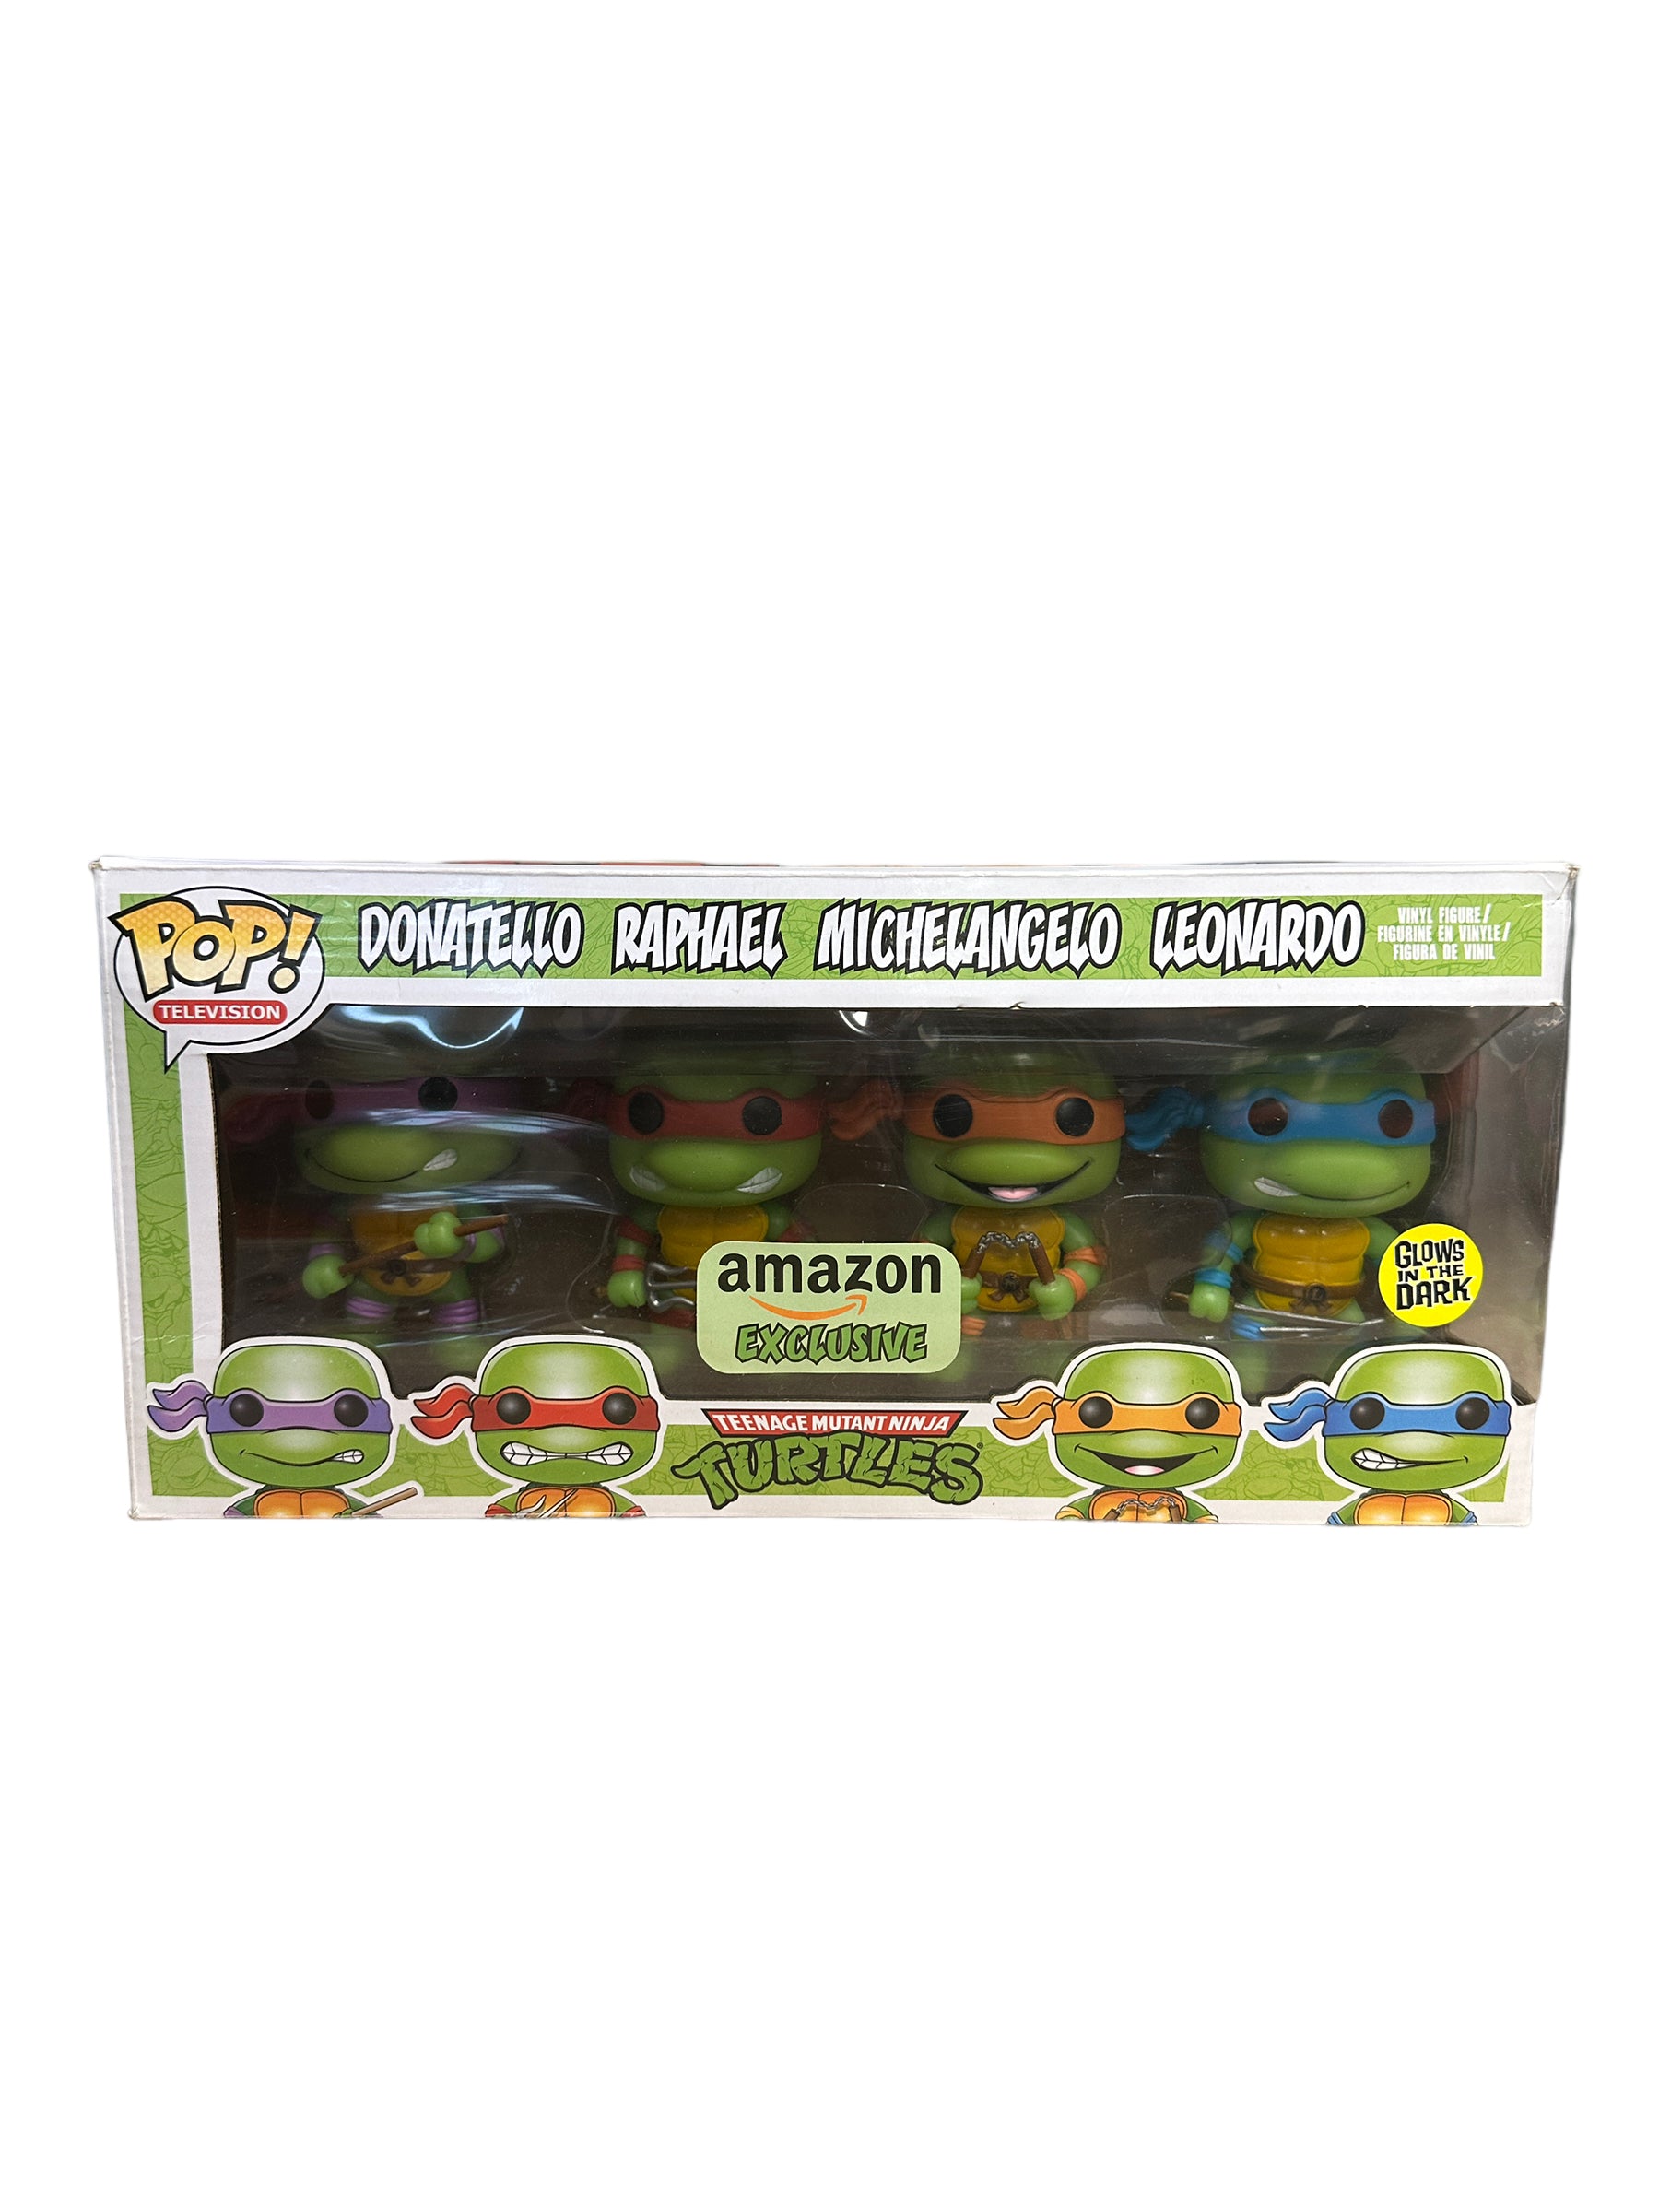 Ninja Turtles (Glows in the Dark) 4 Pack Funko Pop! - Teenage Mutant Ninja Turtles - Amazon Exclusive - Condition 6/10